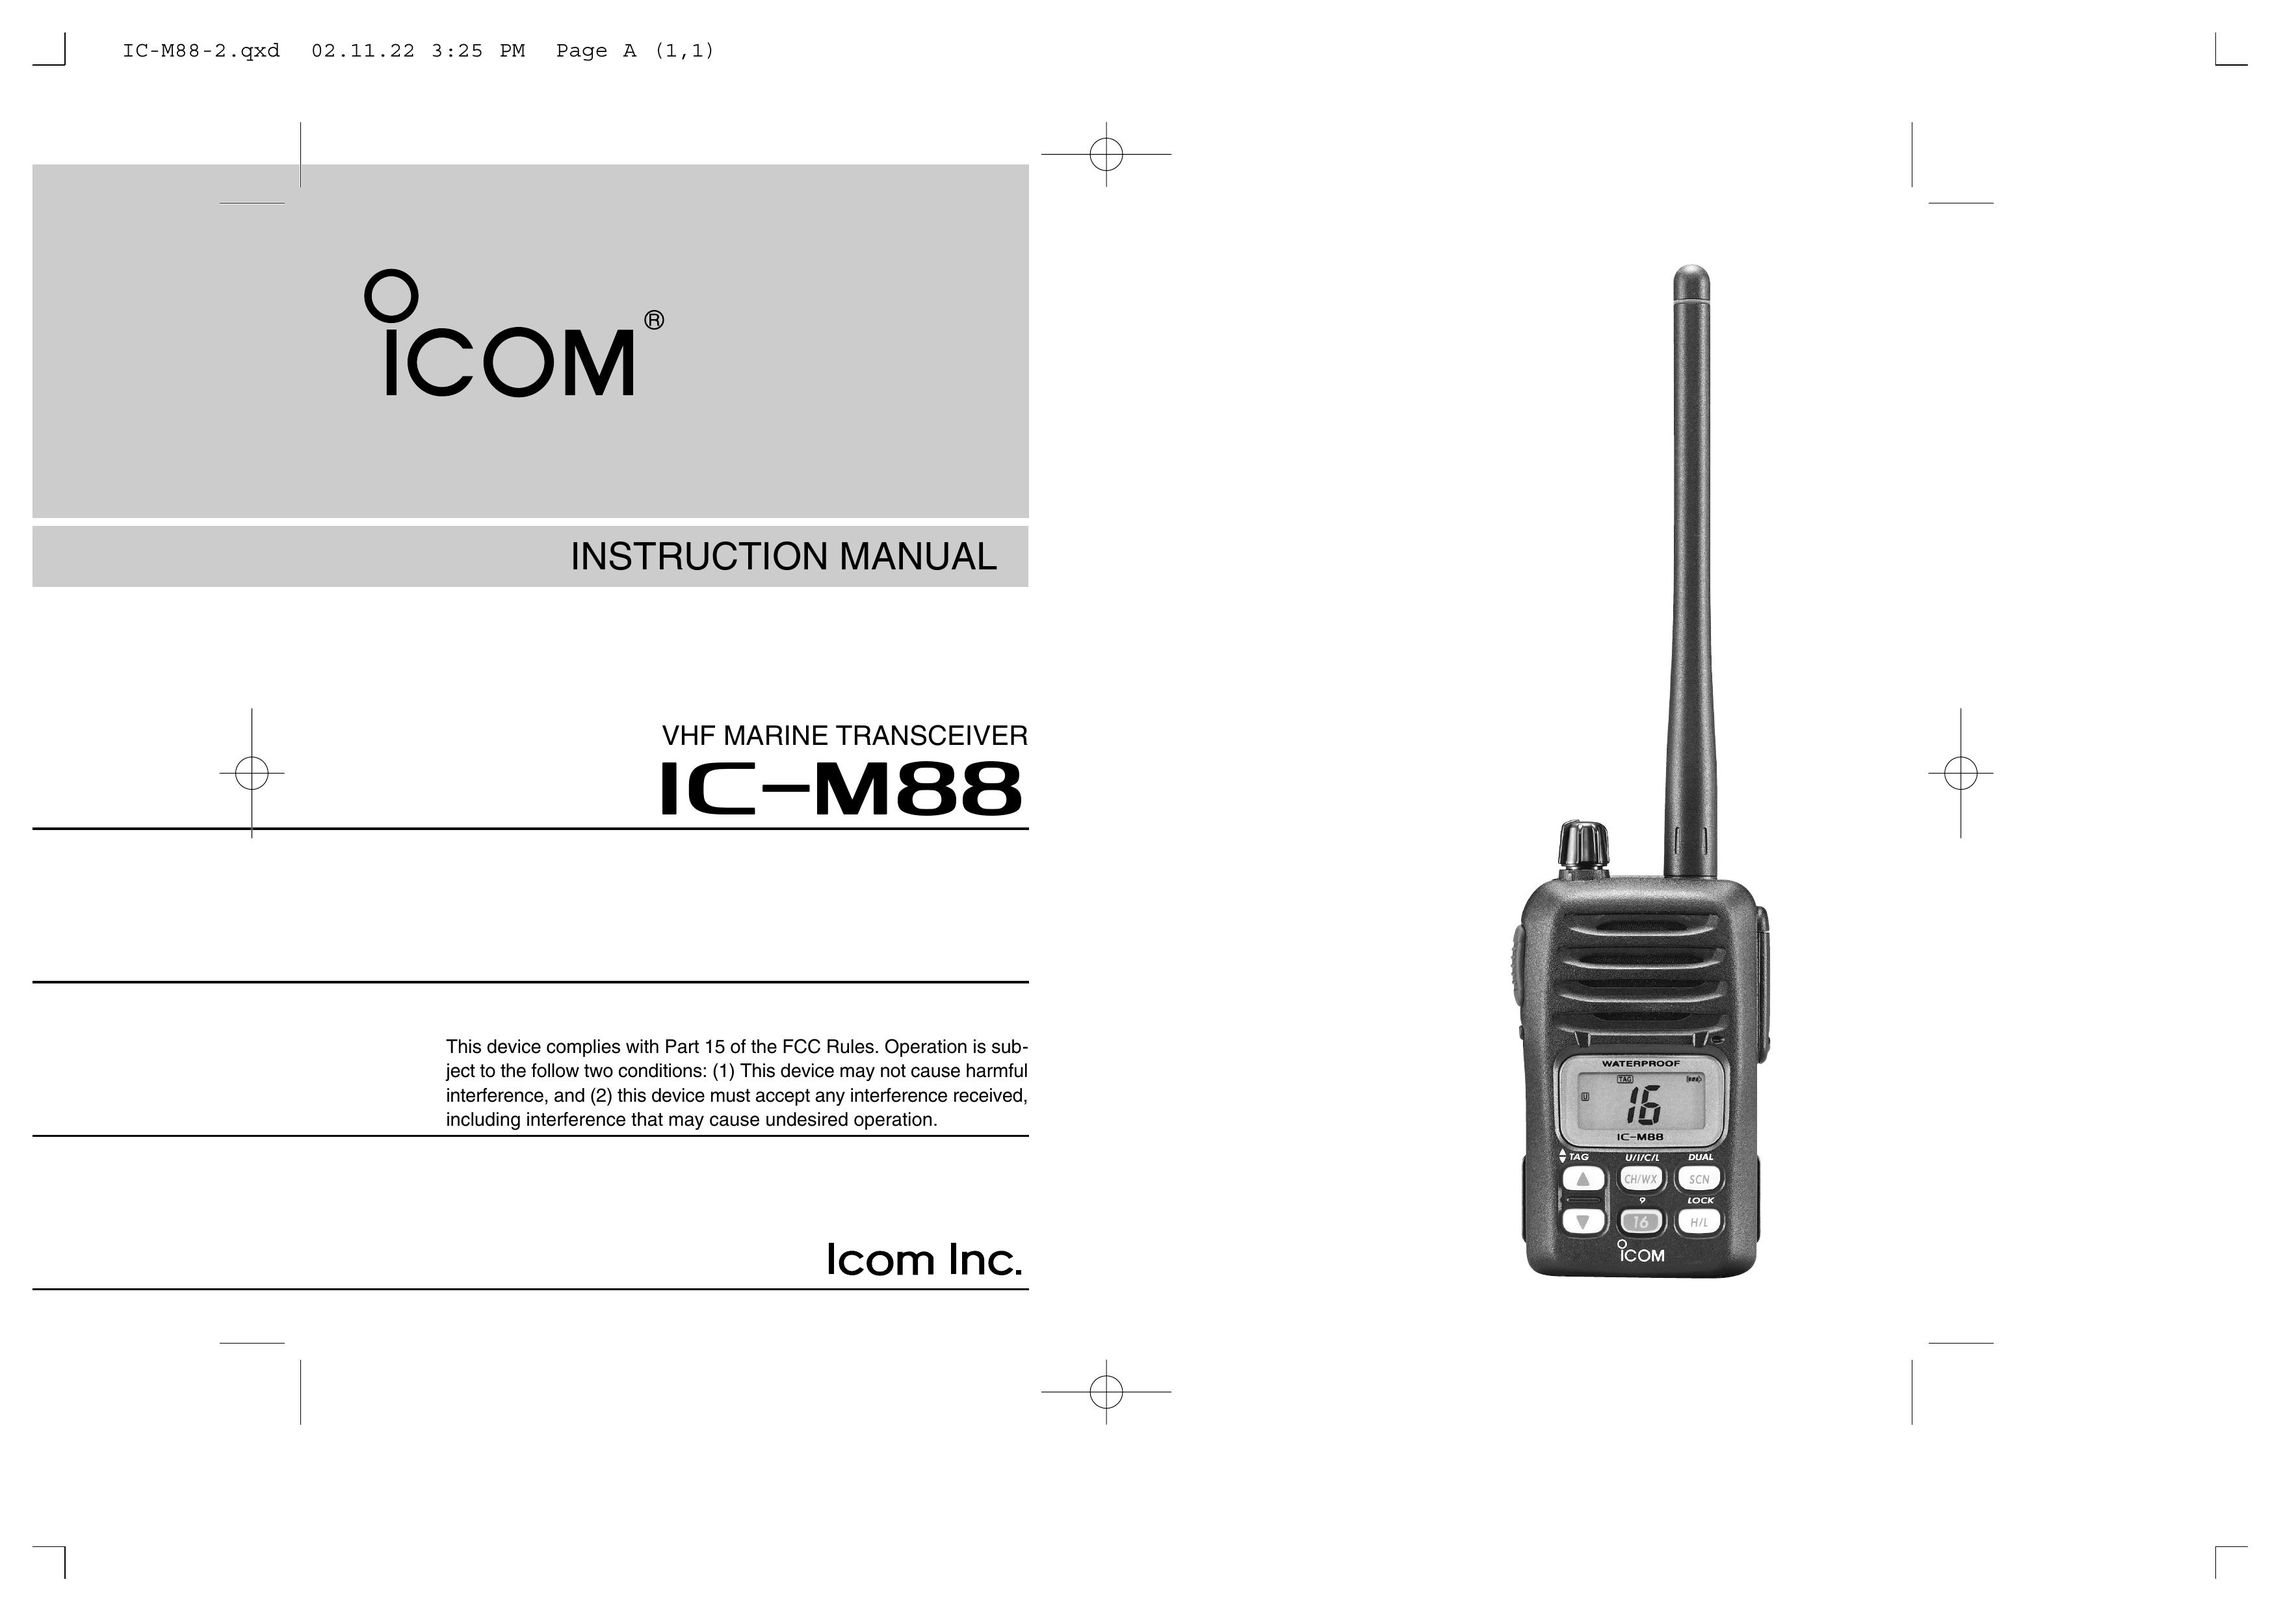 Icom IC-M88 Two-Way Radio User Manual